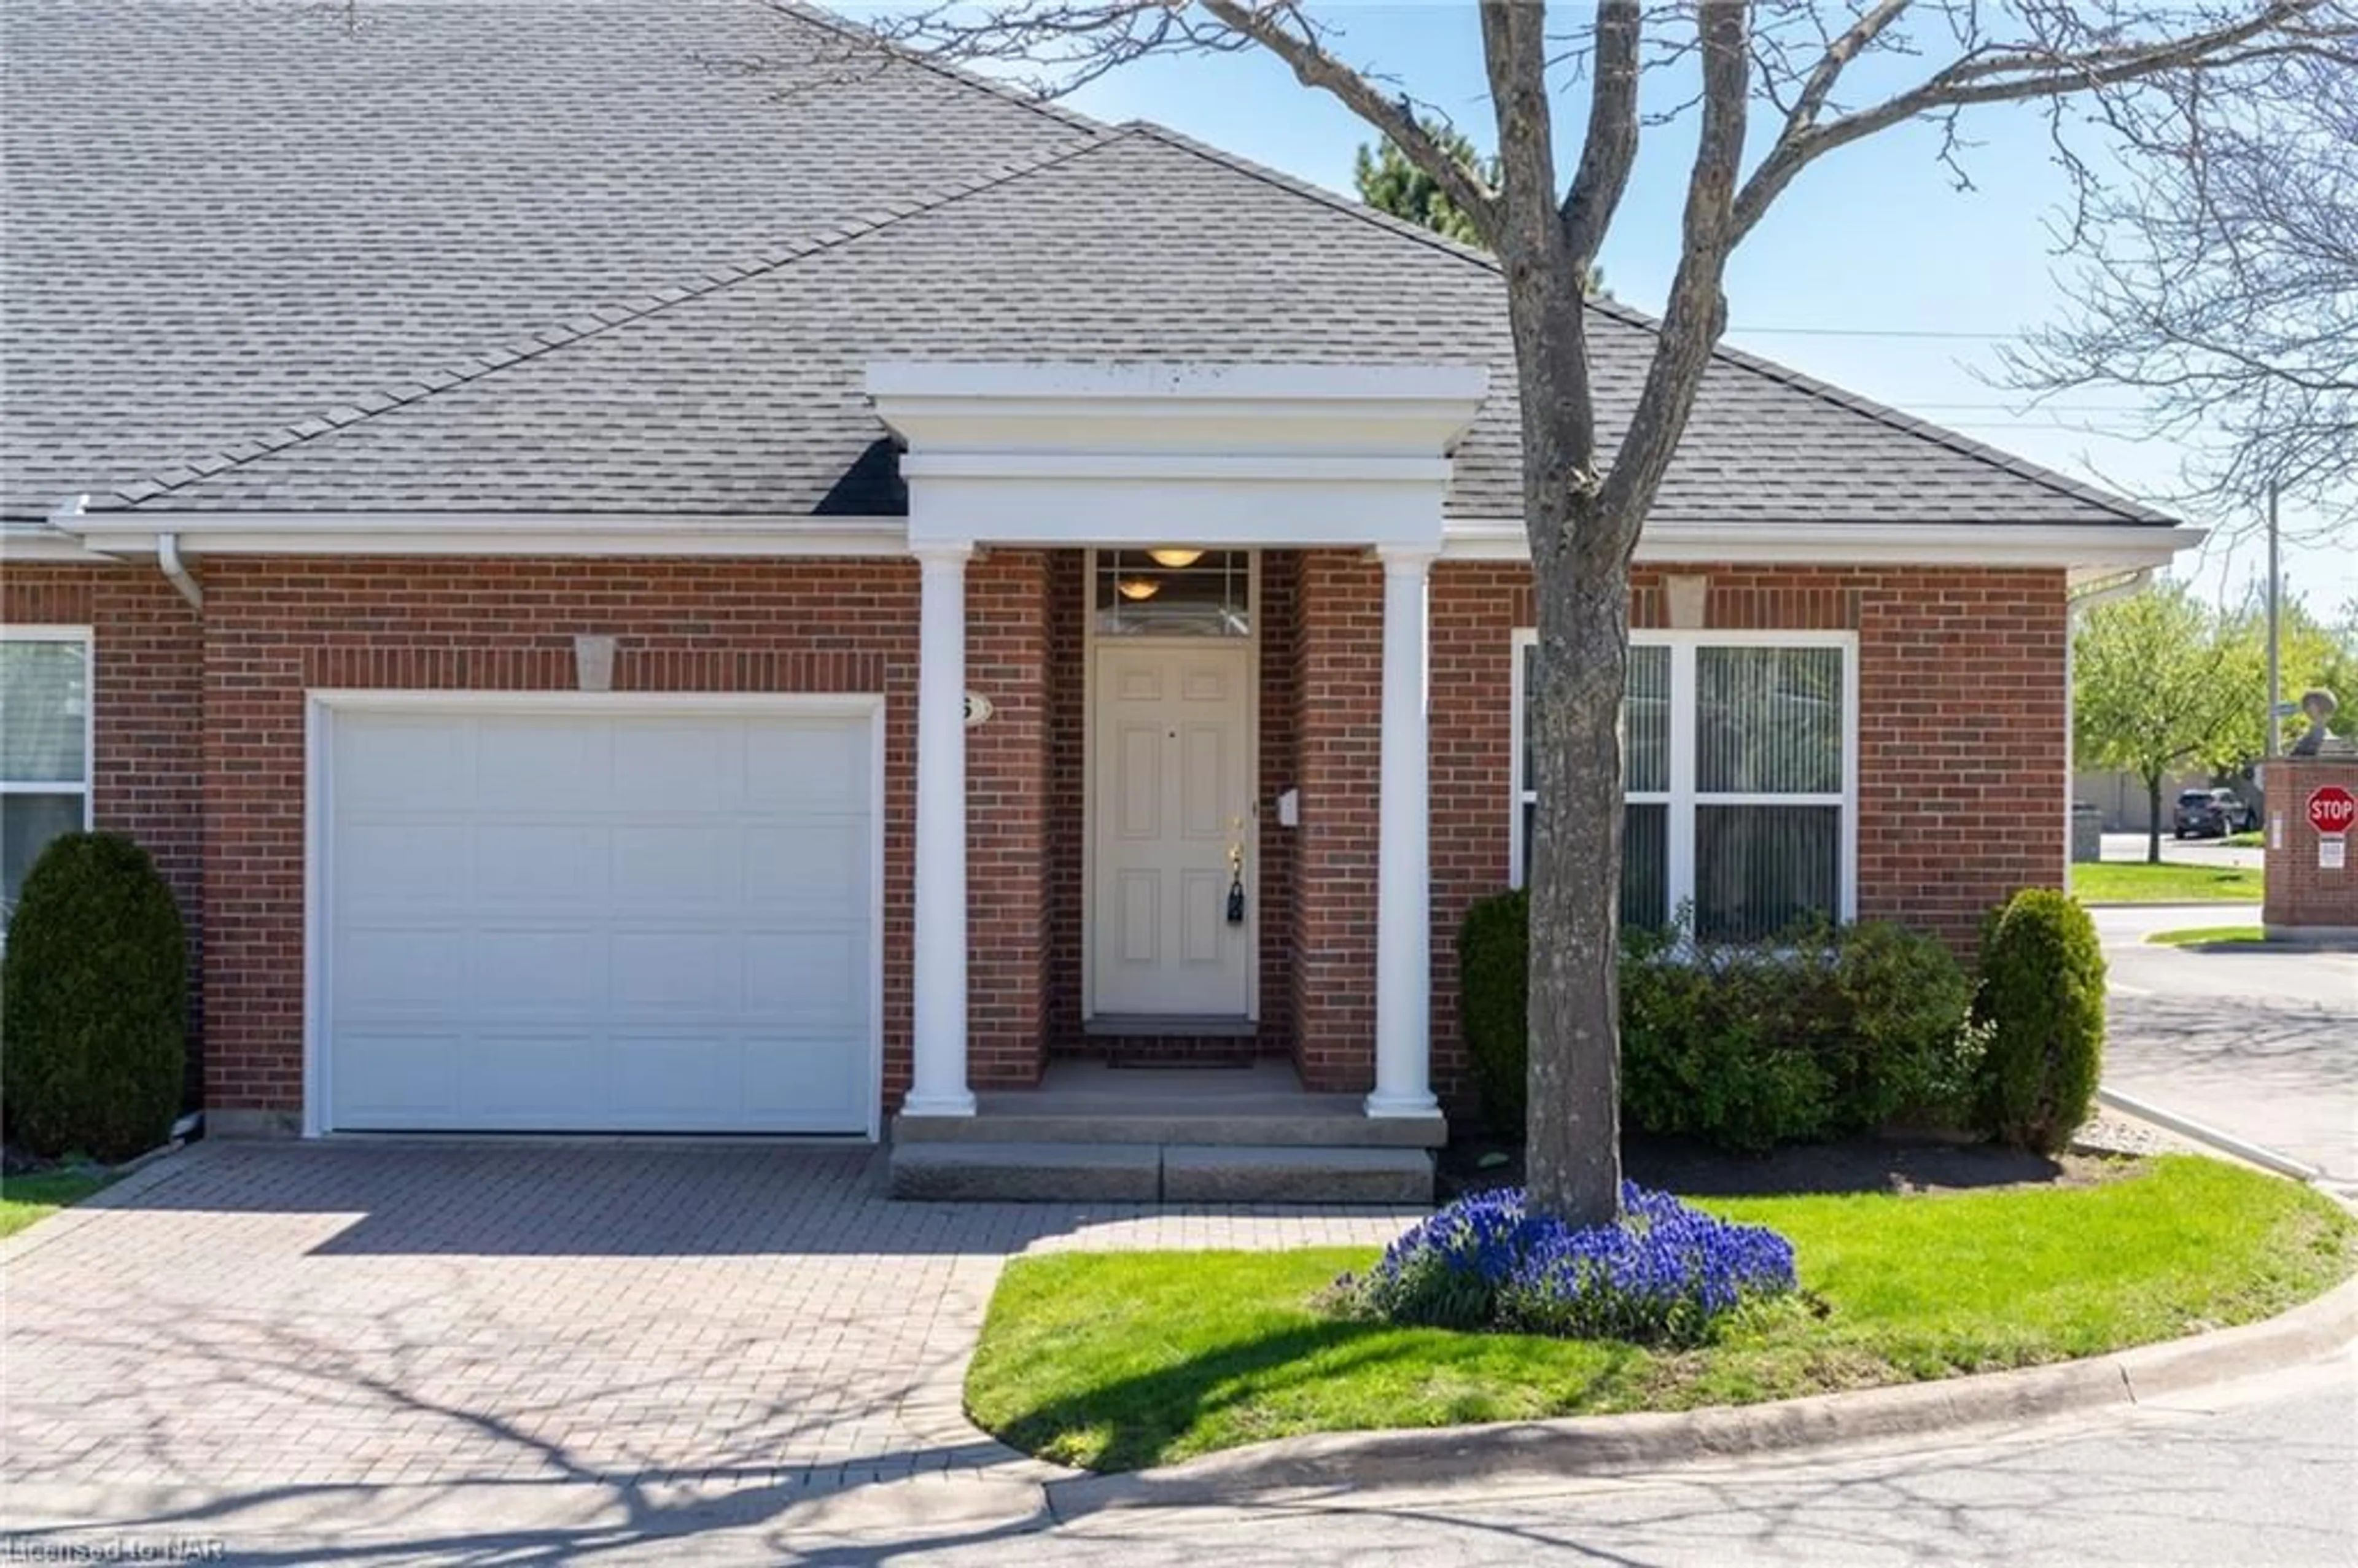 Home with brick exterior material for 3381 Montrose Rd #6, Niagara Falls Ontario L2E 5S4